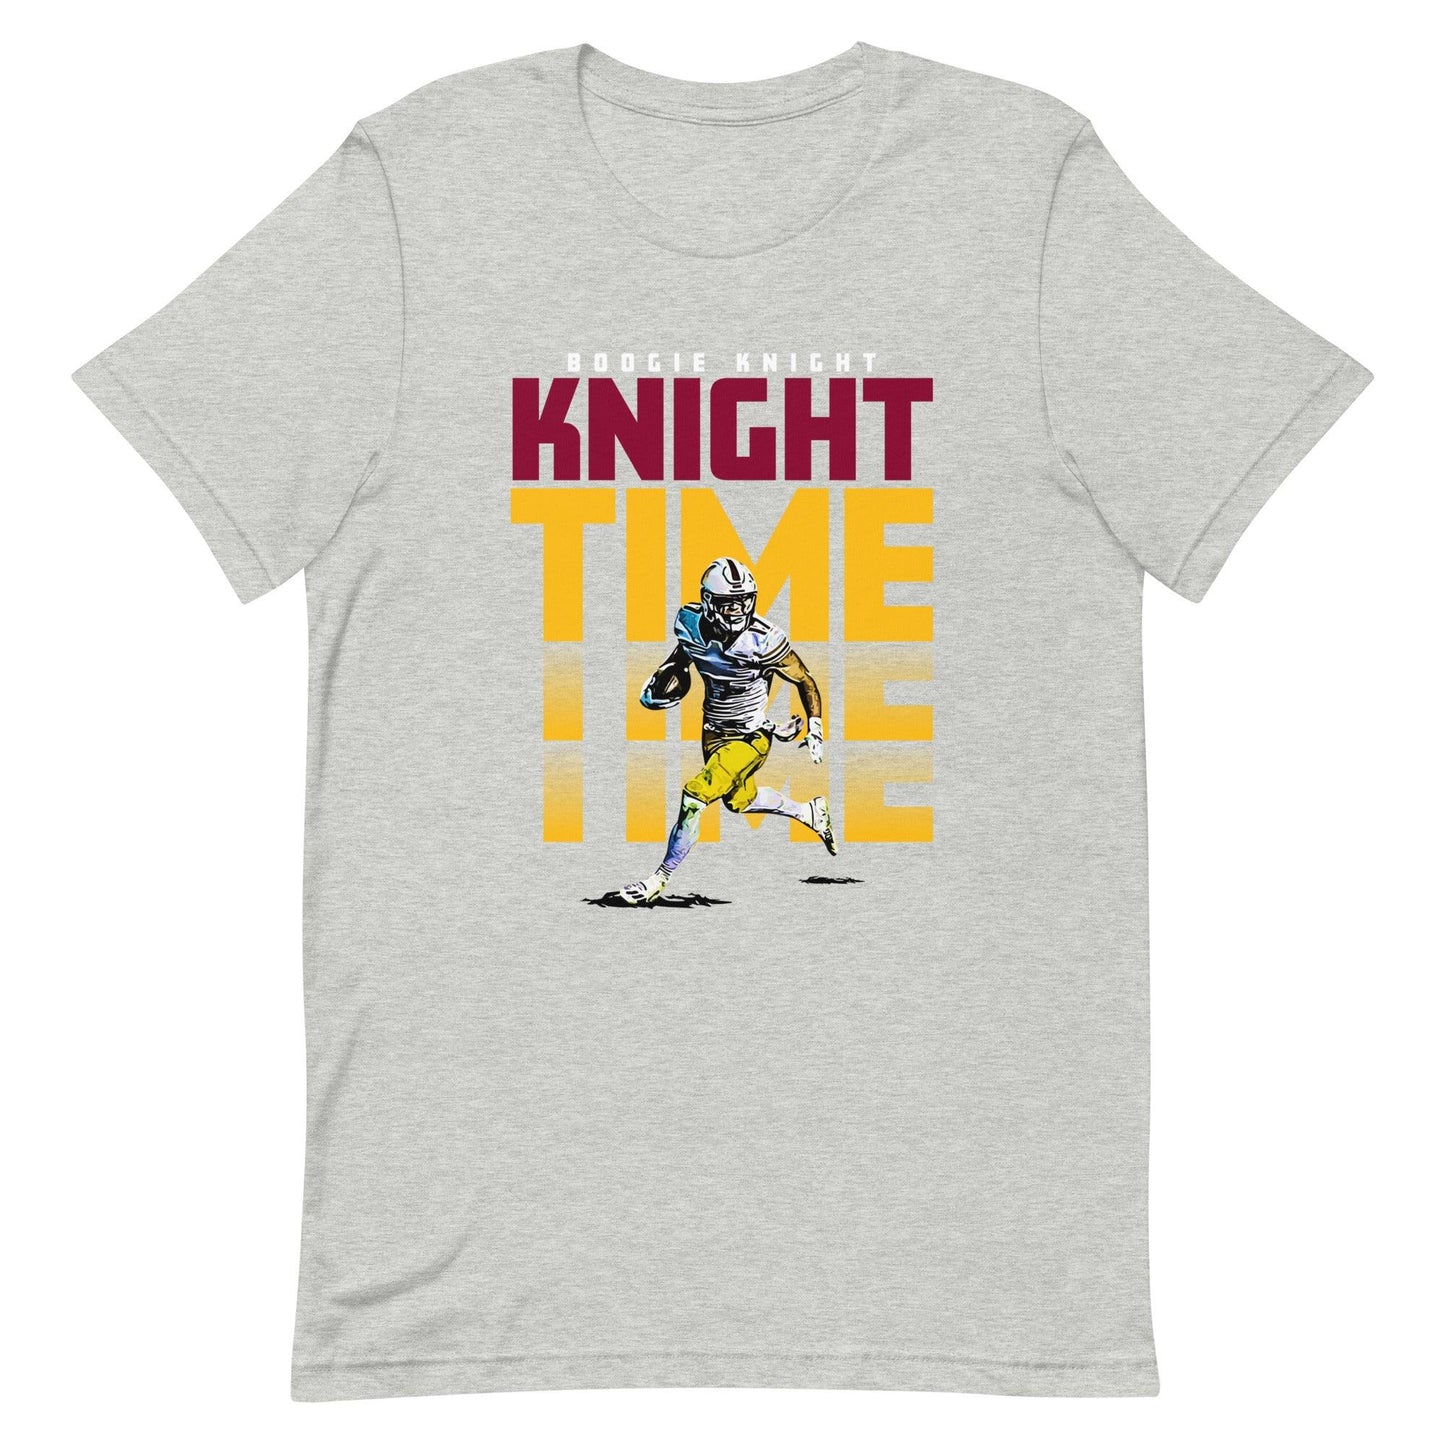 Boogie Knight "Night Time" t-shirt - Fan Arch